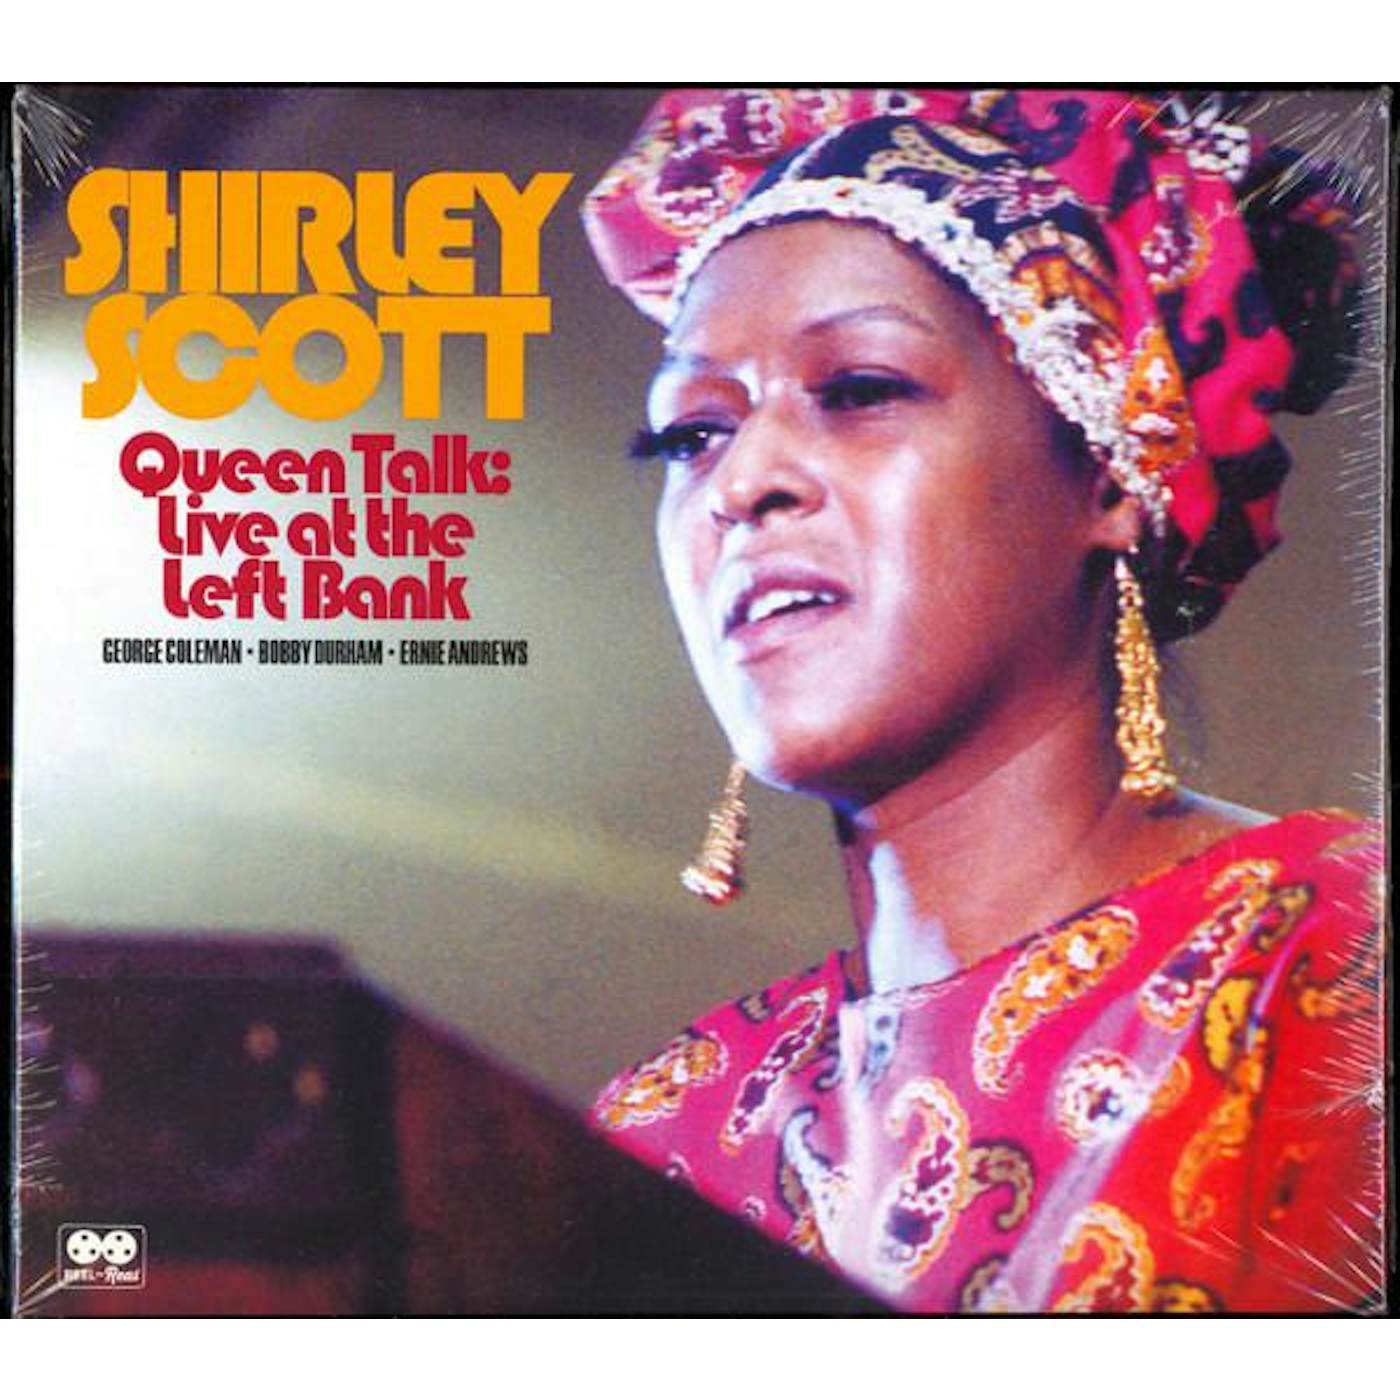 Shirley Scott QUEEN TALK: LIVE AT THE LEFT BANK CD